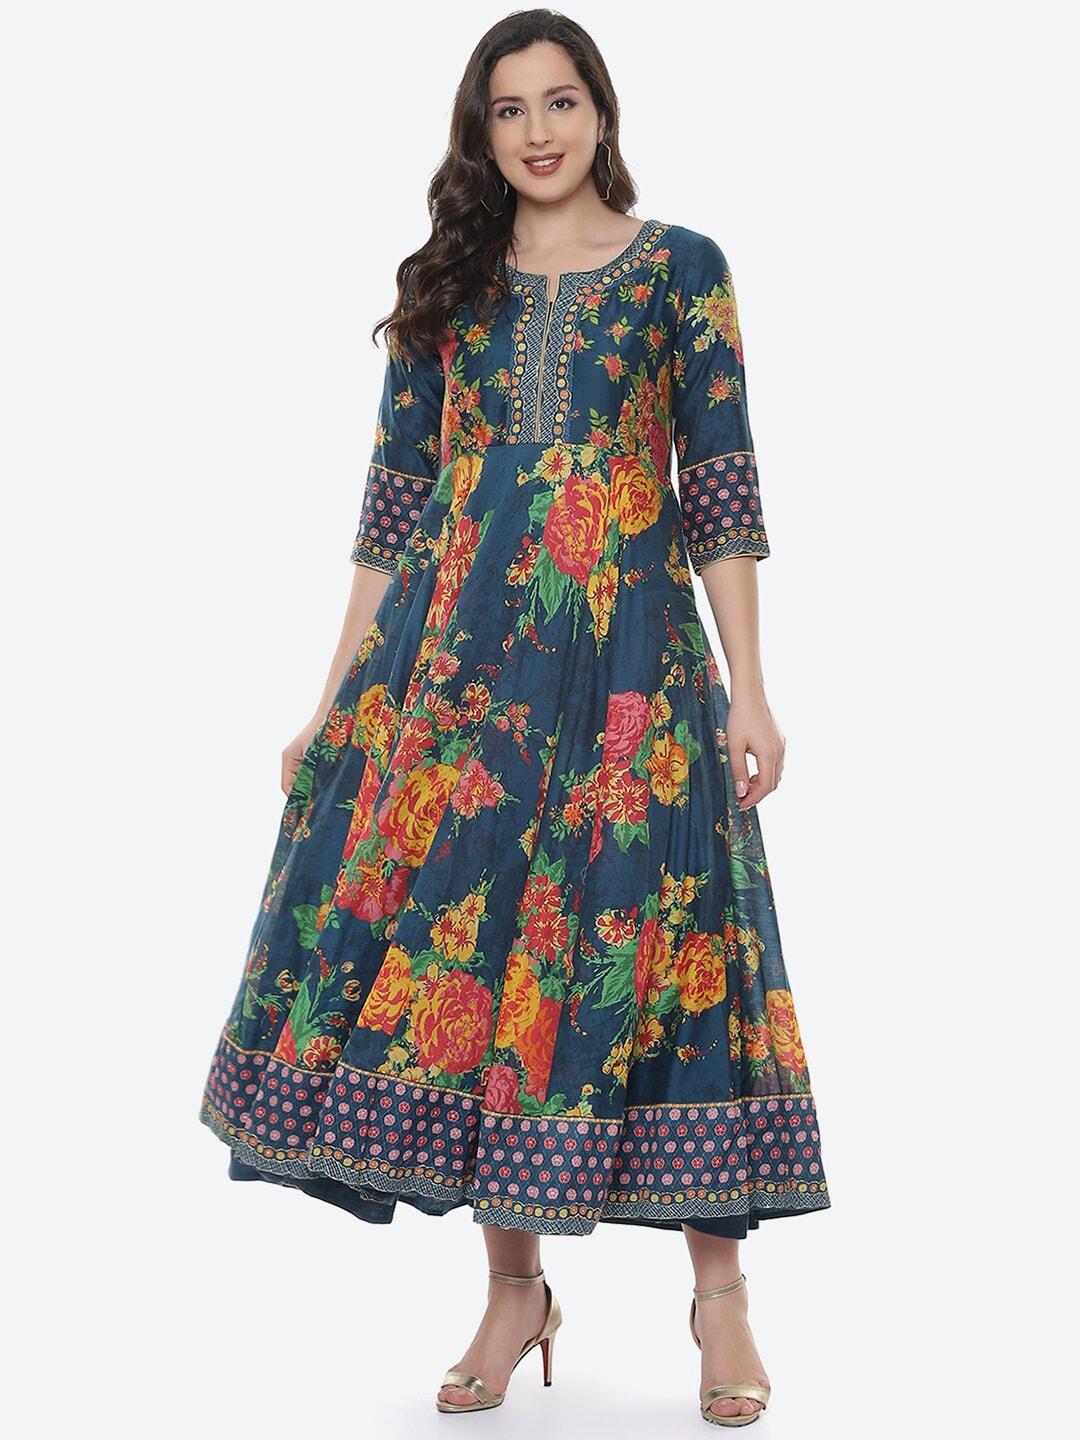 biba teal blue & yellow floral ethnic cotton fit & flare midi dress